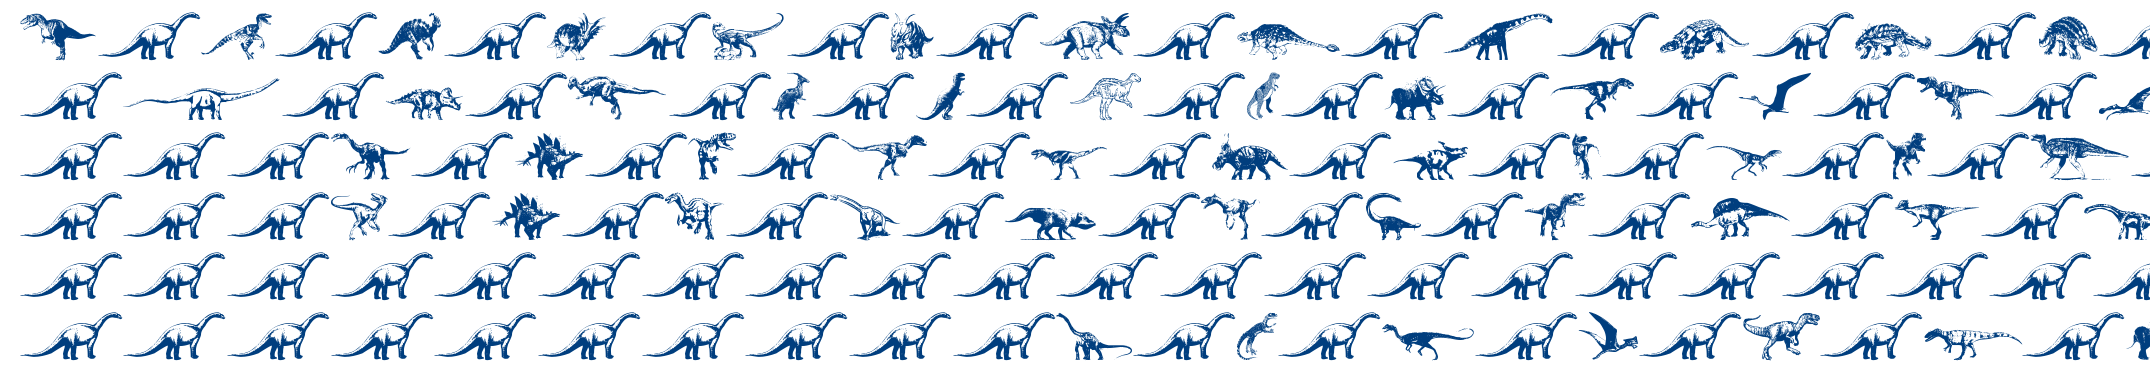 Dinosaurs font